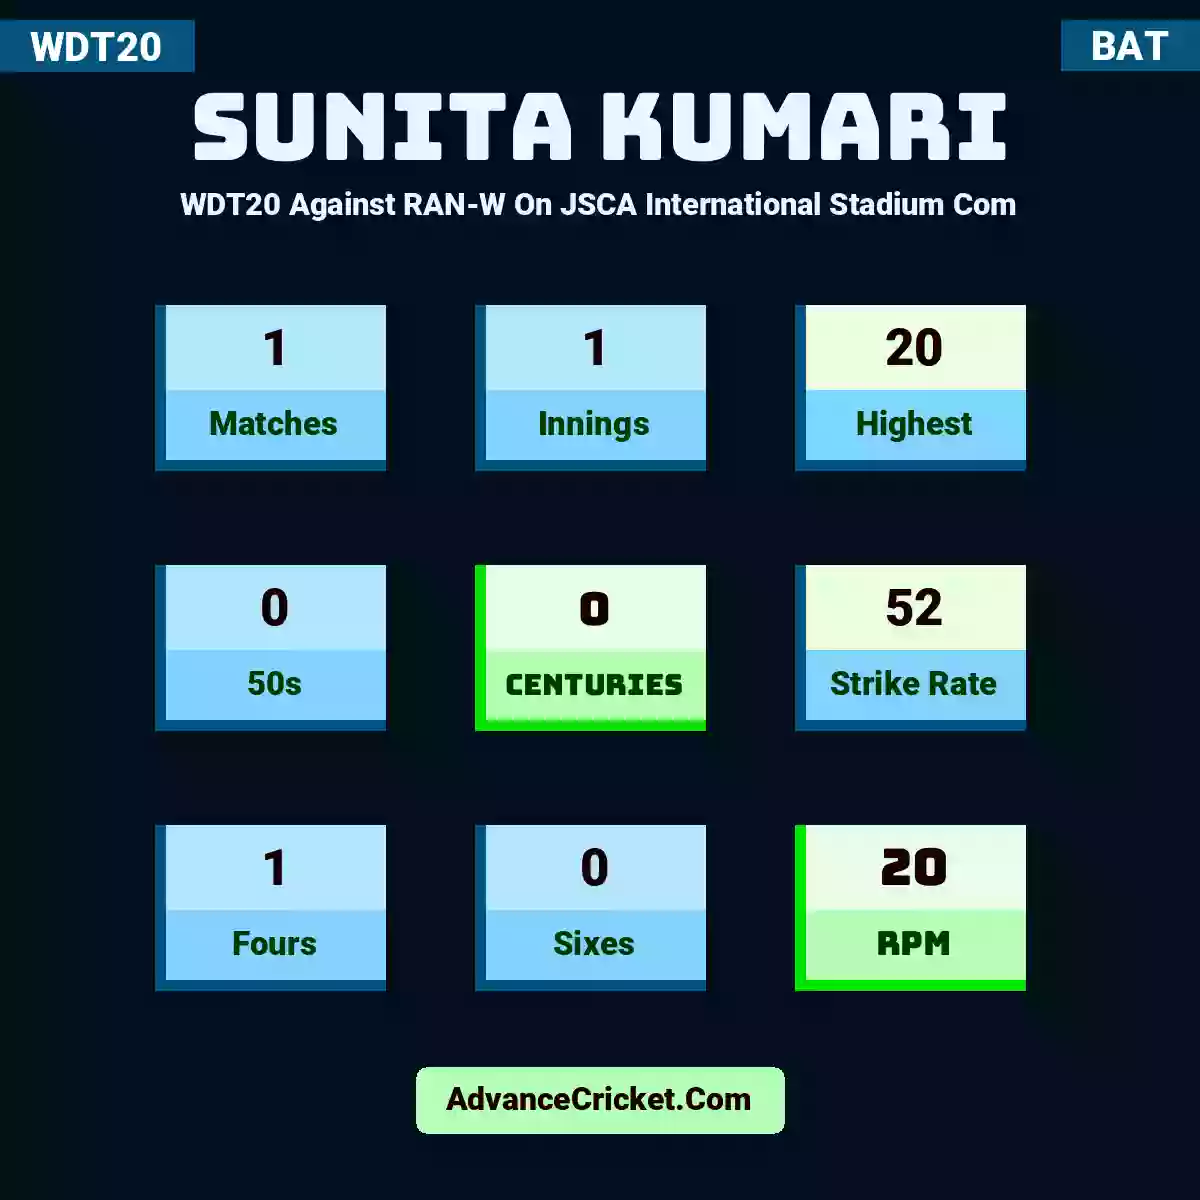 Sunita Kumari WDT20  Against RAN-W On JSCA International Stadium Com, Sunita Kumari played 1 matches, scored 20 runs as highest, 0 half-centuries, and 0 centuries, with a strike rate of 52. S.Kumari hit 1 fours and 0 sixes, with an RPM of 20.